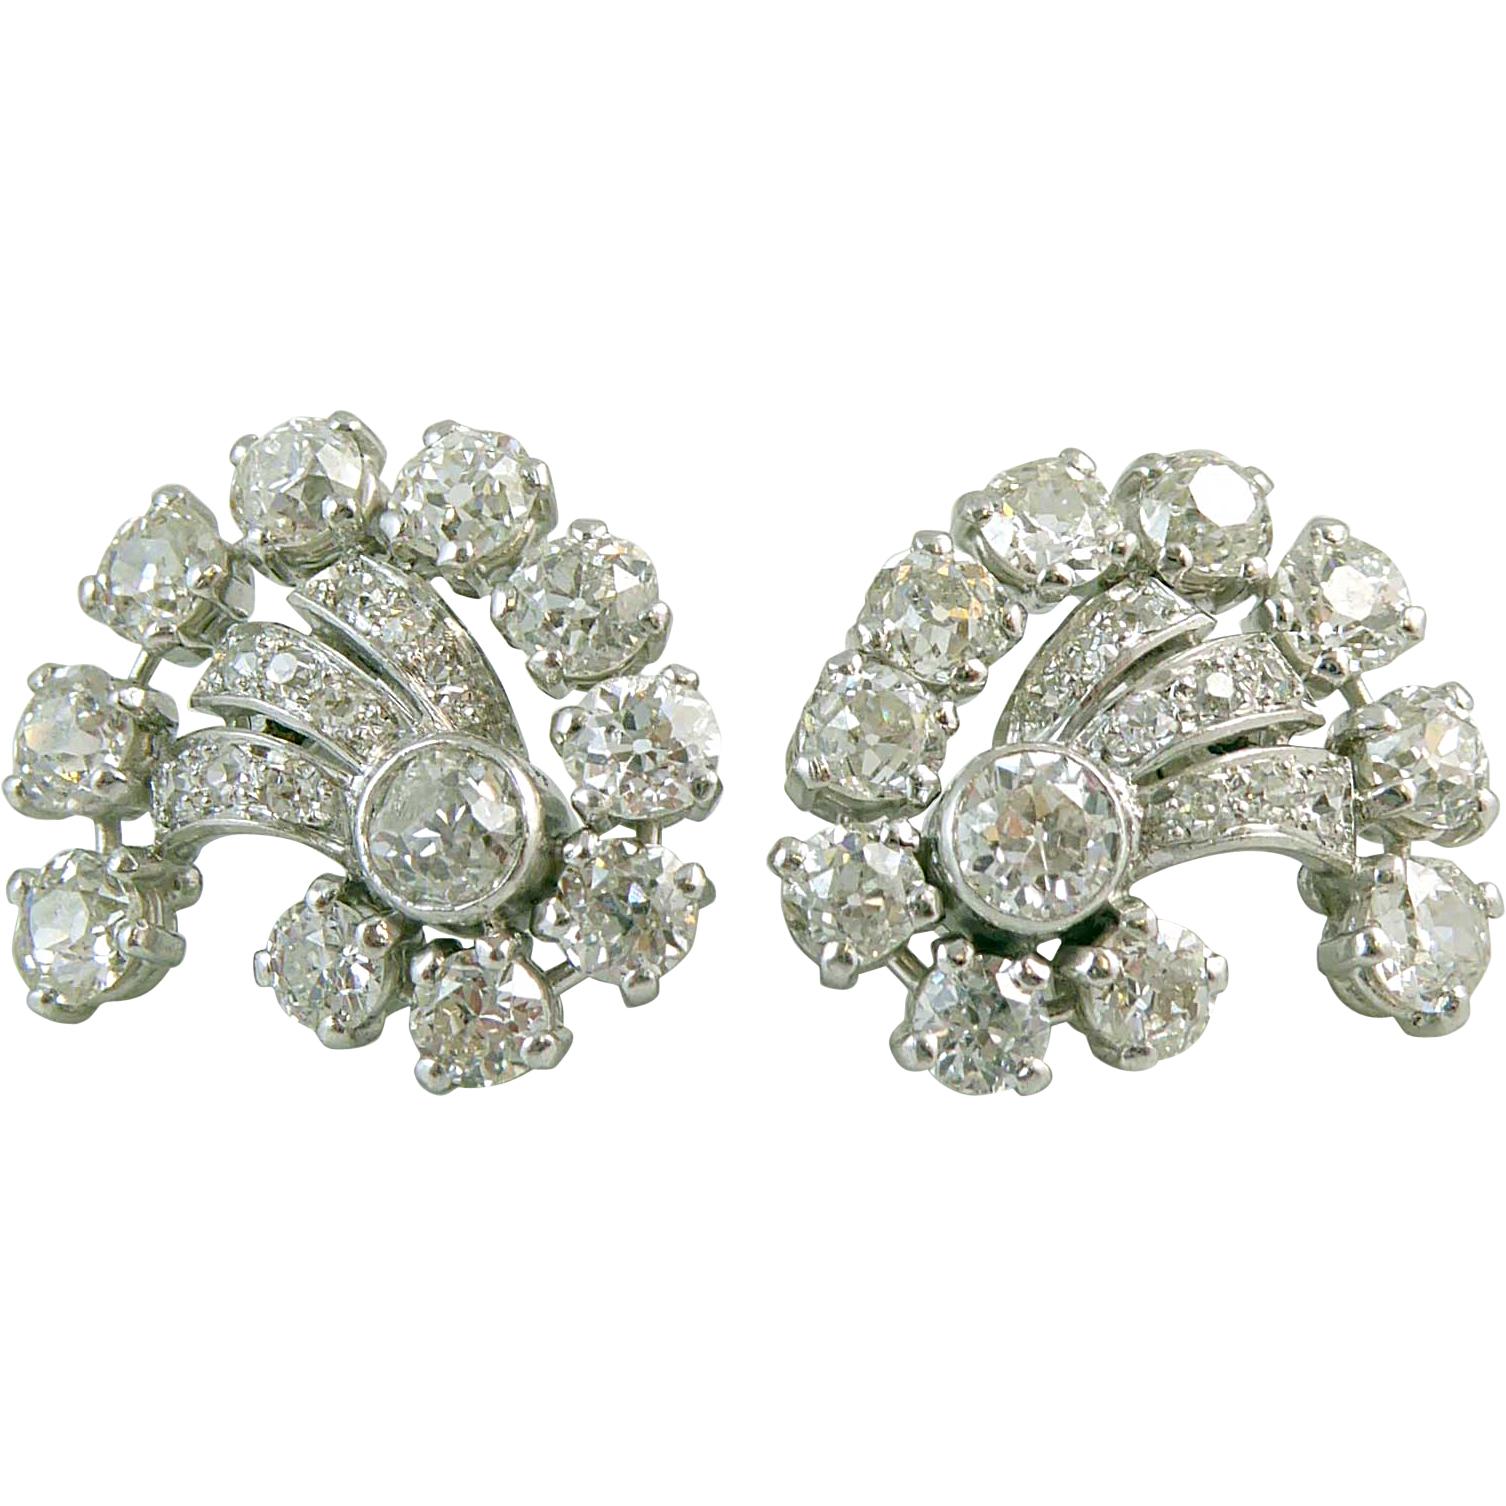 Vintage 3.74 Carat Old European Cut Diamond Earrings, 1950s-1960s Cluster Stud